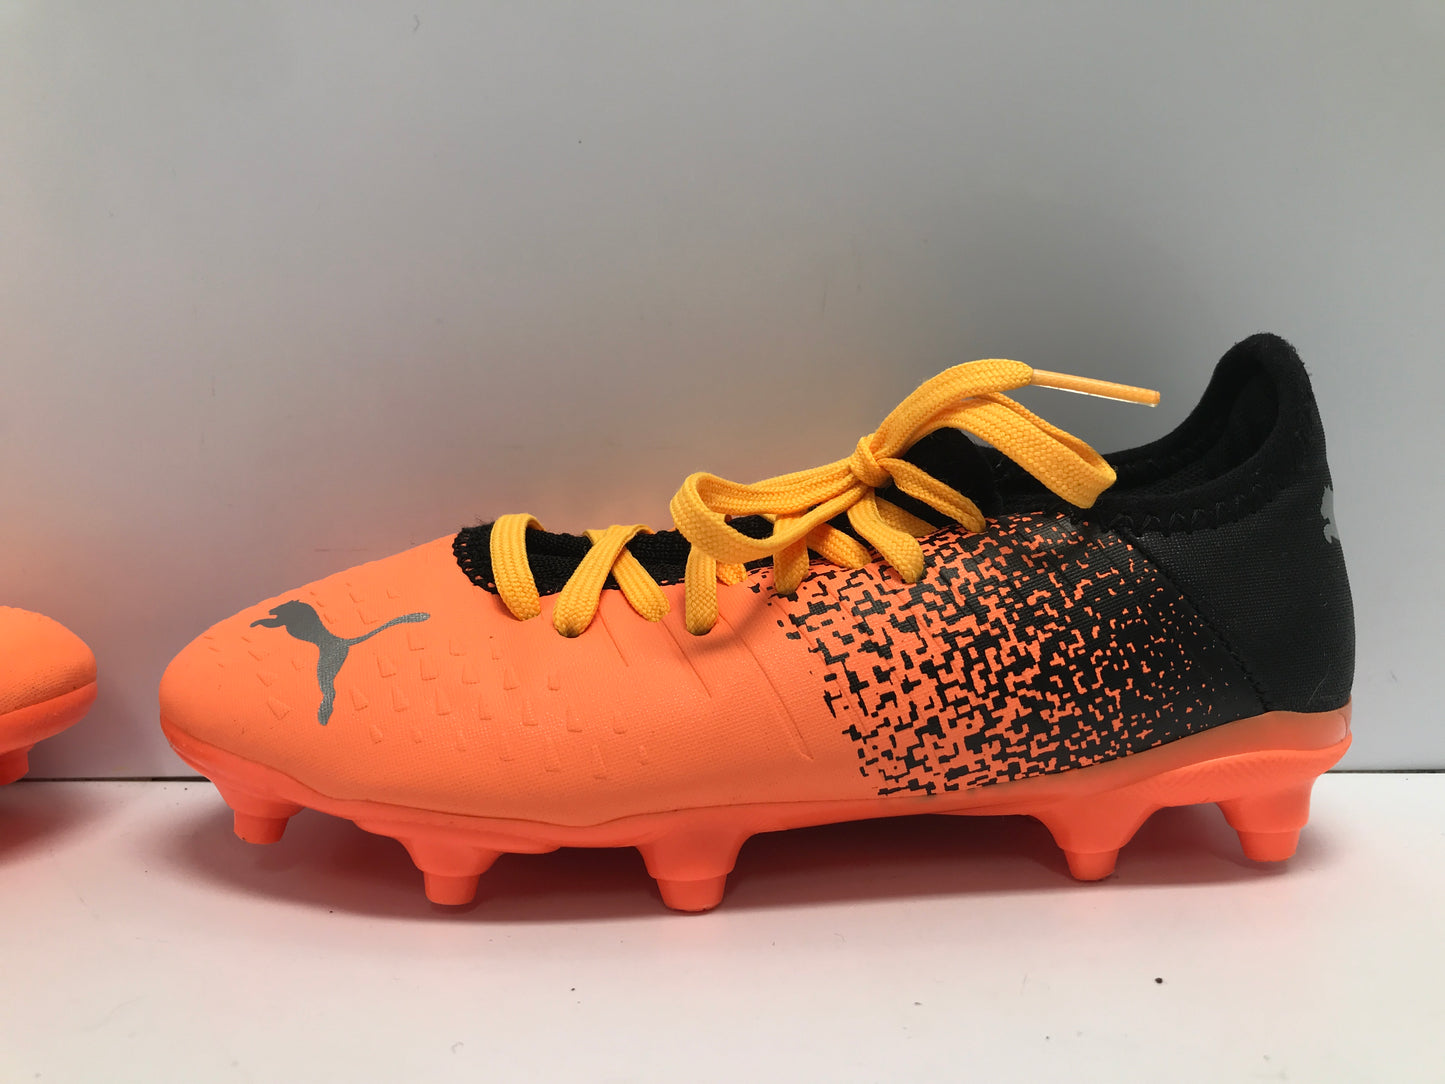 Soccer Shoes Cleats Child Size 1 Puma Future Tangerine Black Slipper Foot Like New